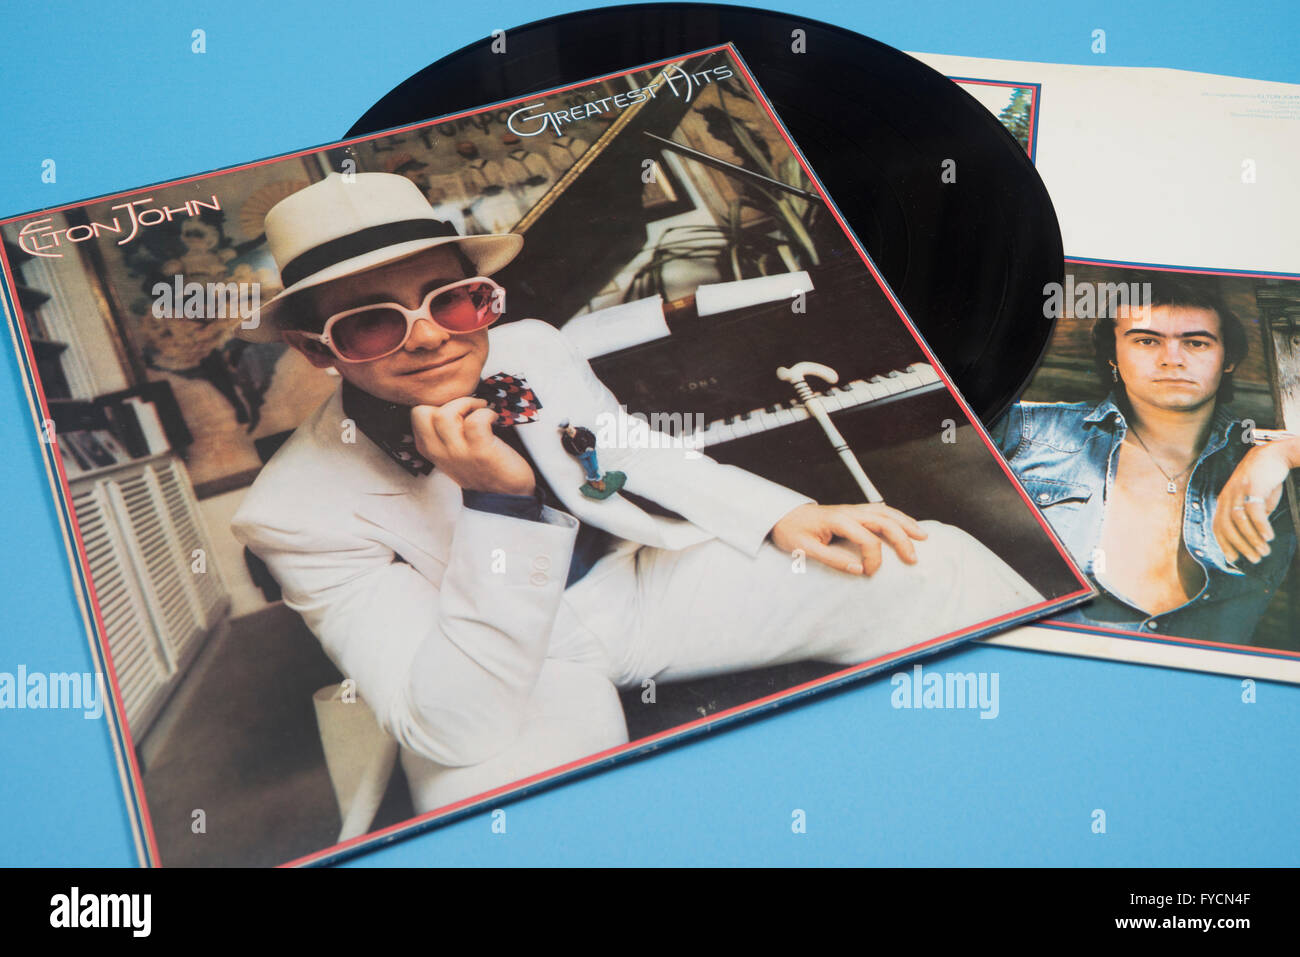 Greatest Hits album on vinyl by Elton John with original sleeve artwork Stock Photo